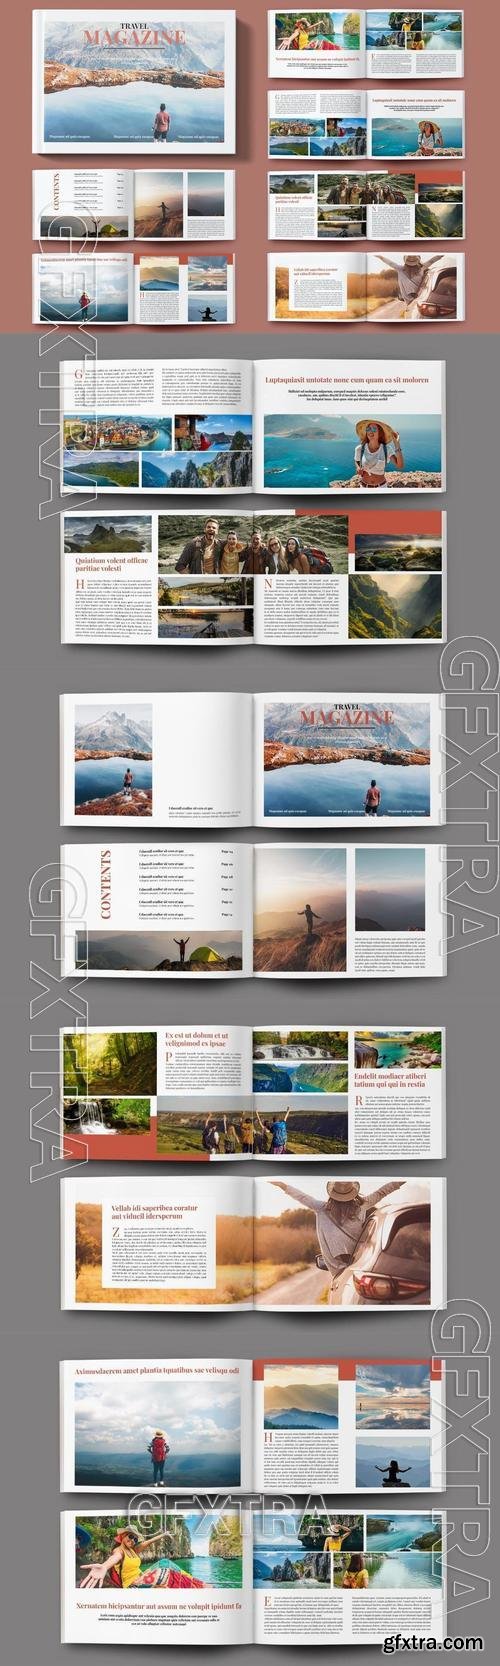 Travel Magazine Landscape EZ4R9TK